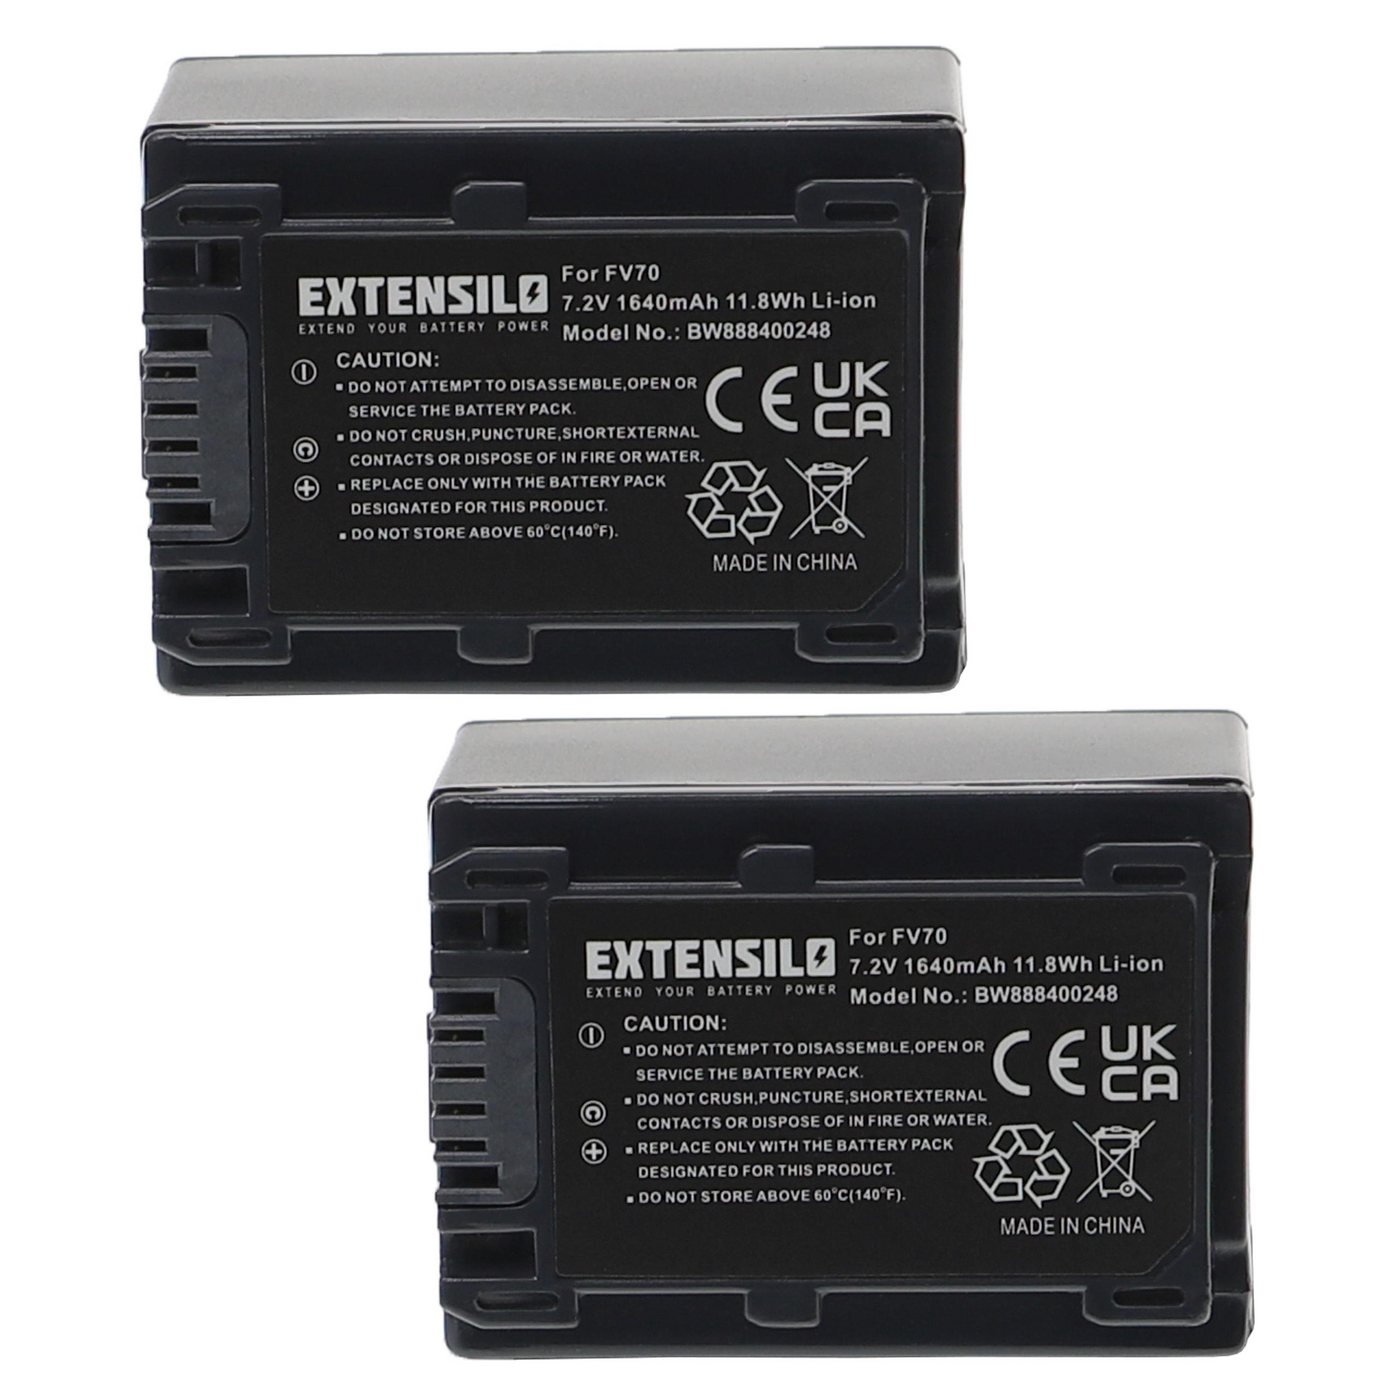 Extensilo passend für Sony DCR-HC48E, DCR-HC42E, DCR-HC44E, DCR-HC45E, DCR-HC46E, DCR-HC47E, DCR-HC51E Kamera / Foto DSLR / Camcorder Analog / Camcorder Digital (1640mAh, 7,2V, Li-Ion) Kamera-Akku 1640 mAh von Extensilo